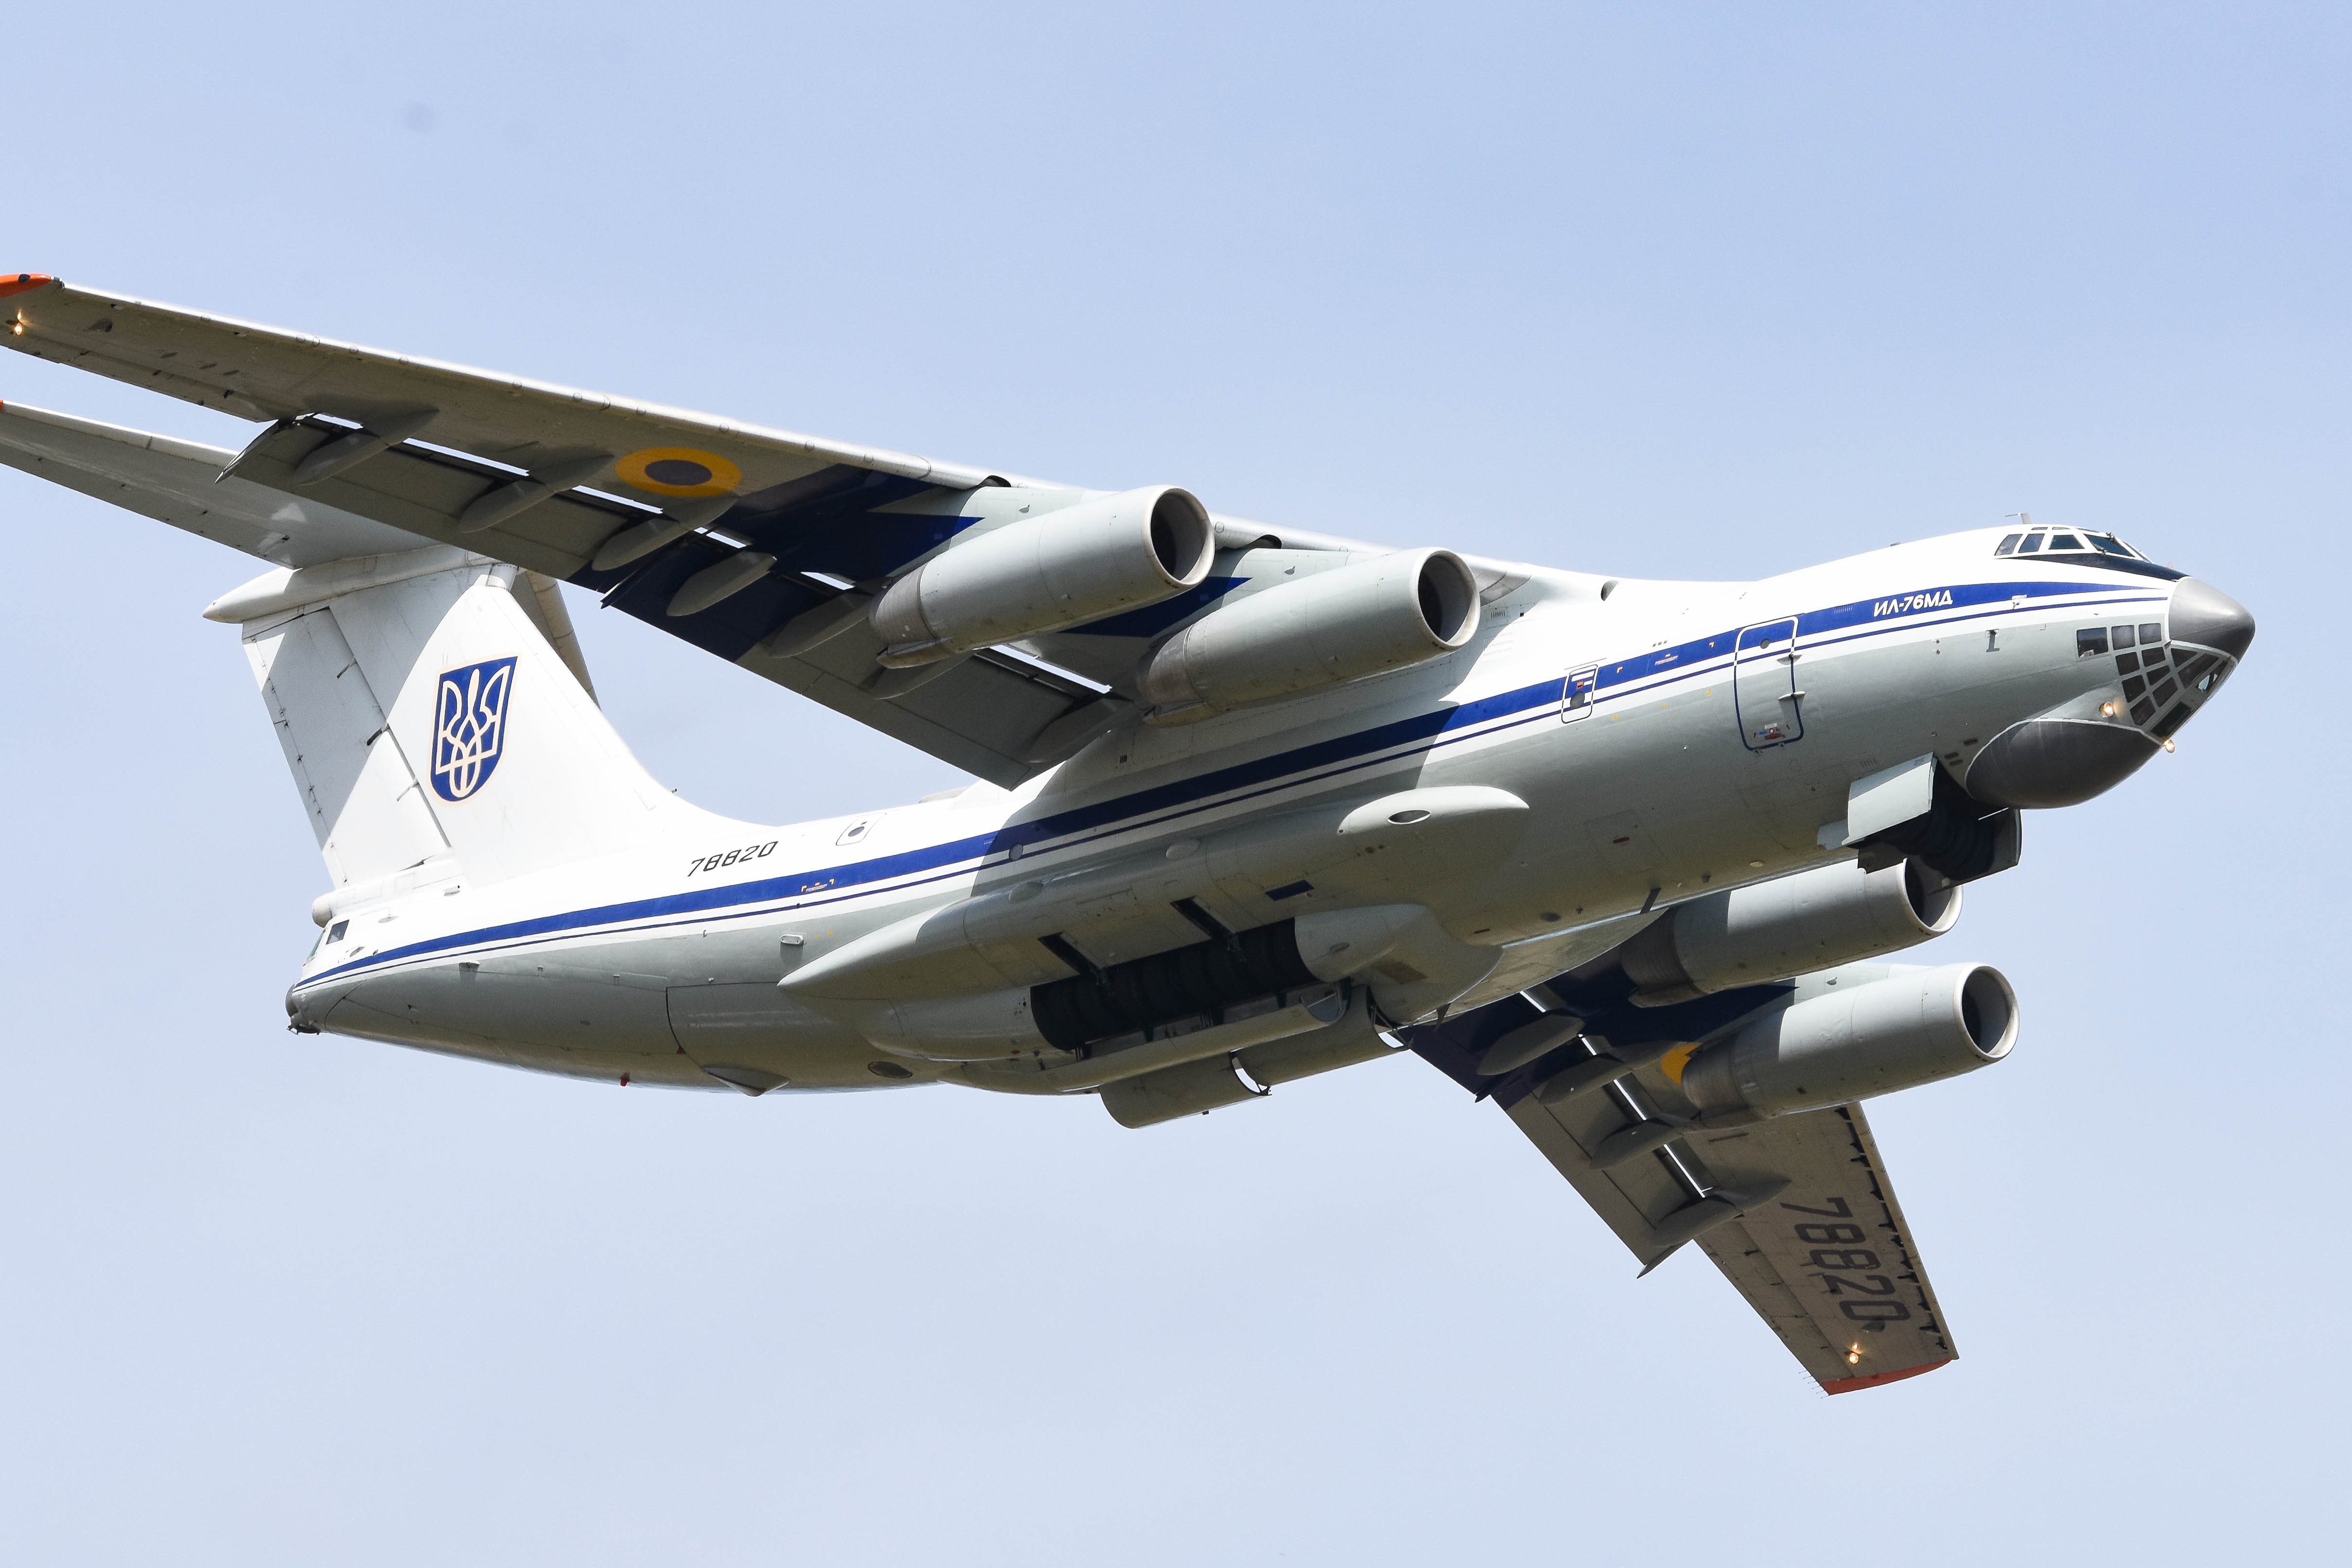 78820/78820 Ukraine Air Force Ilyushin Il-76 Airframe Information - AVSpotters.com